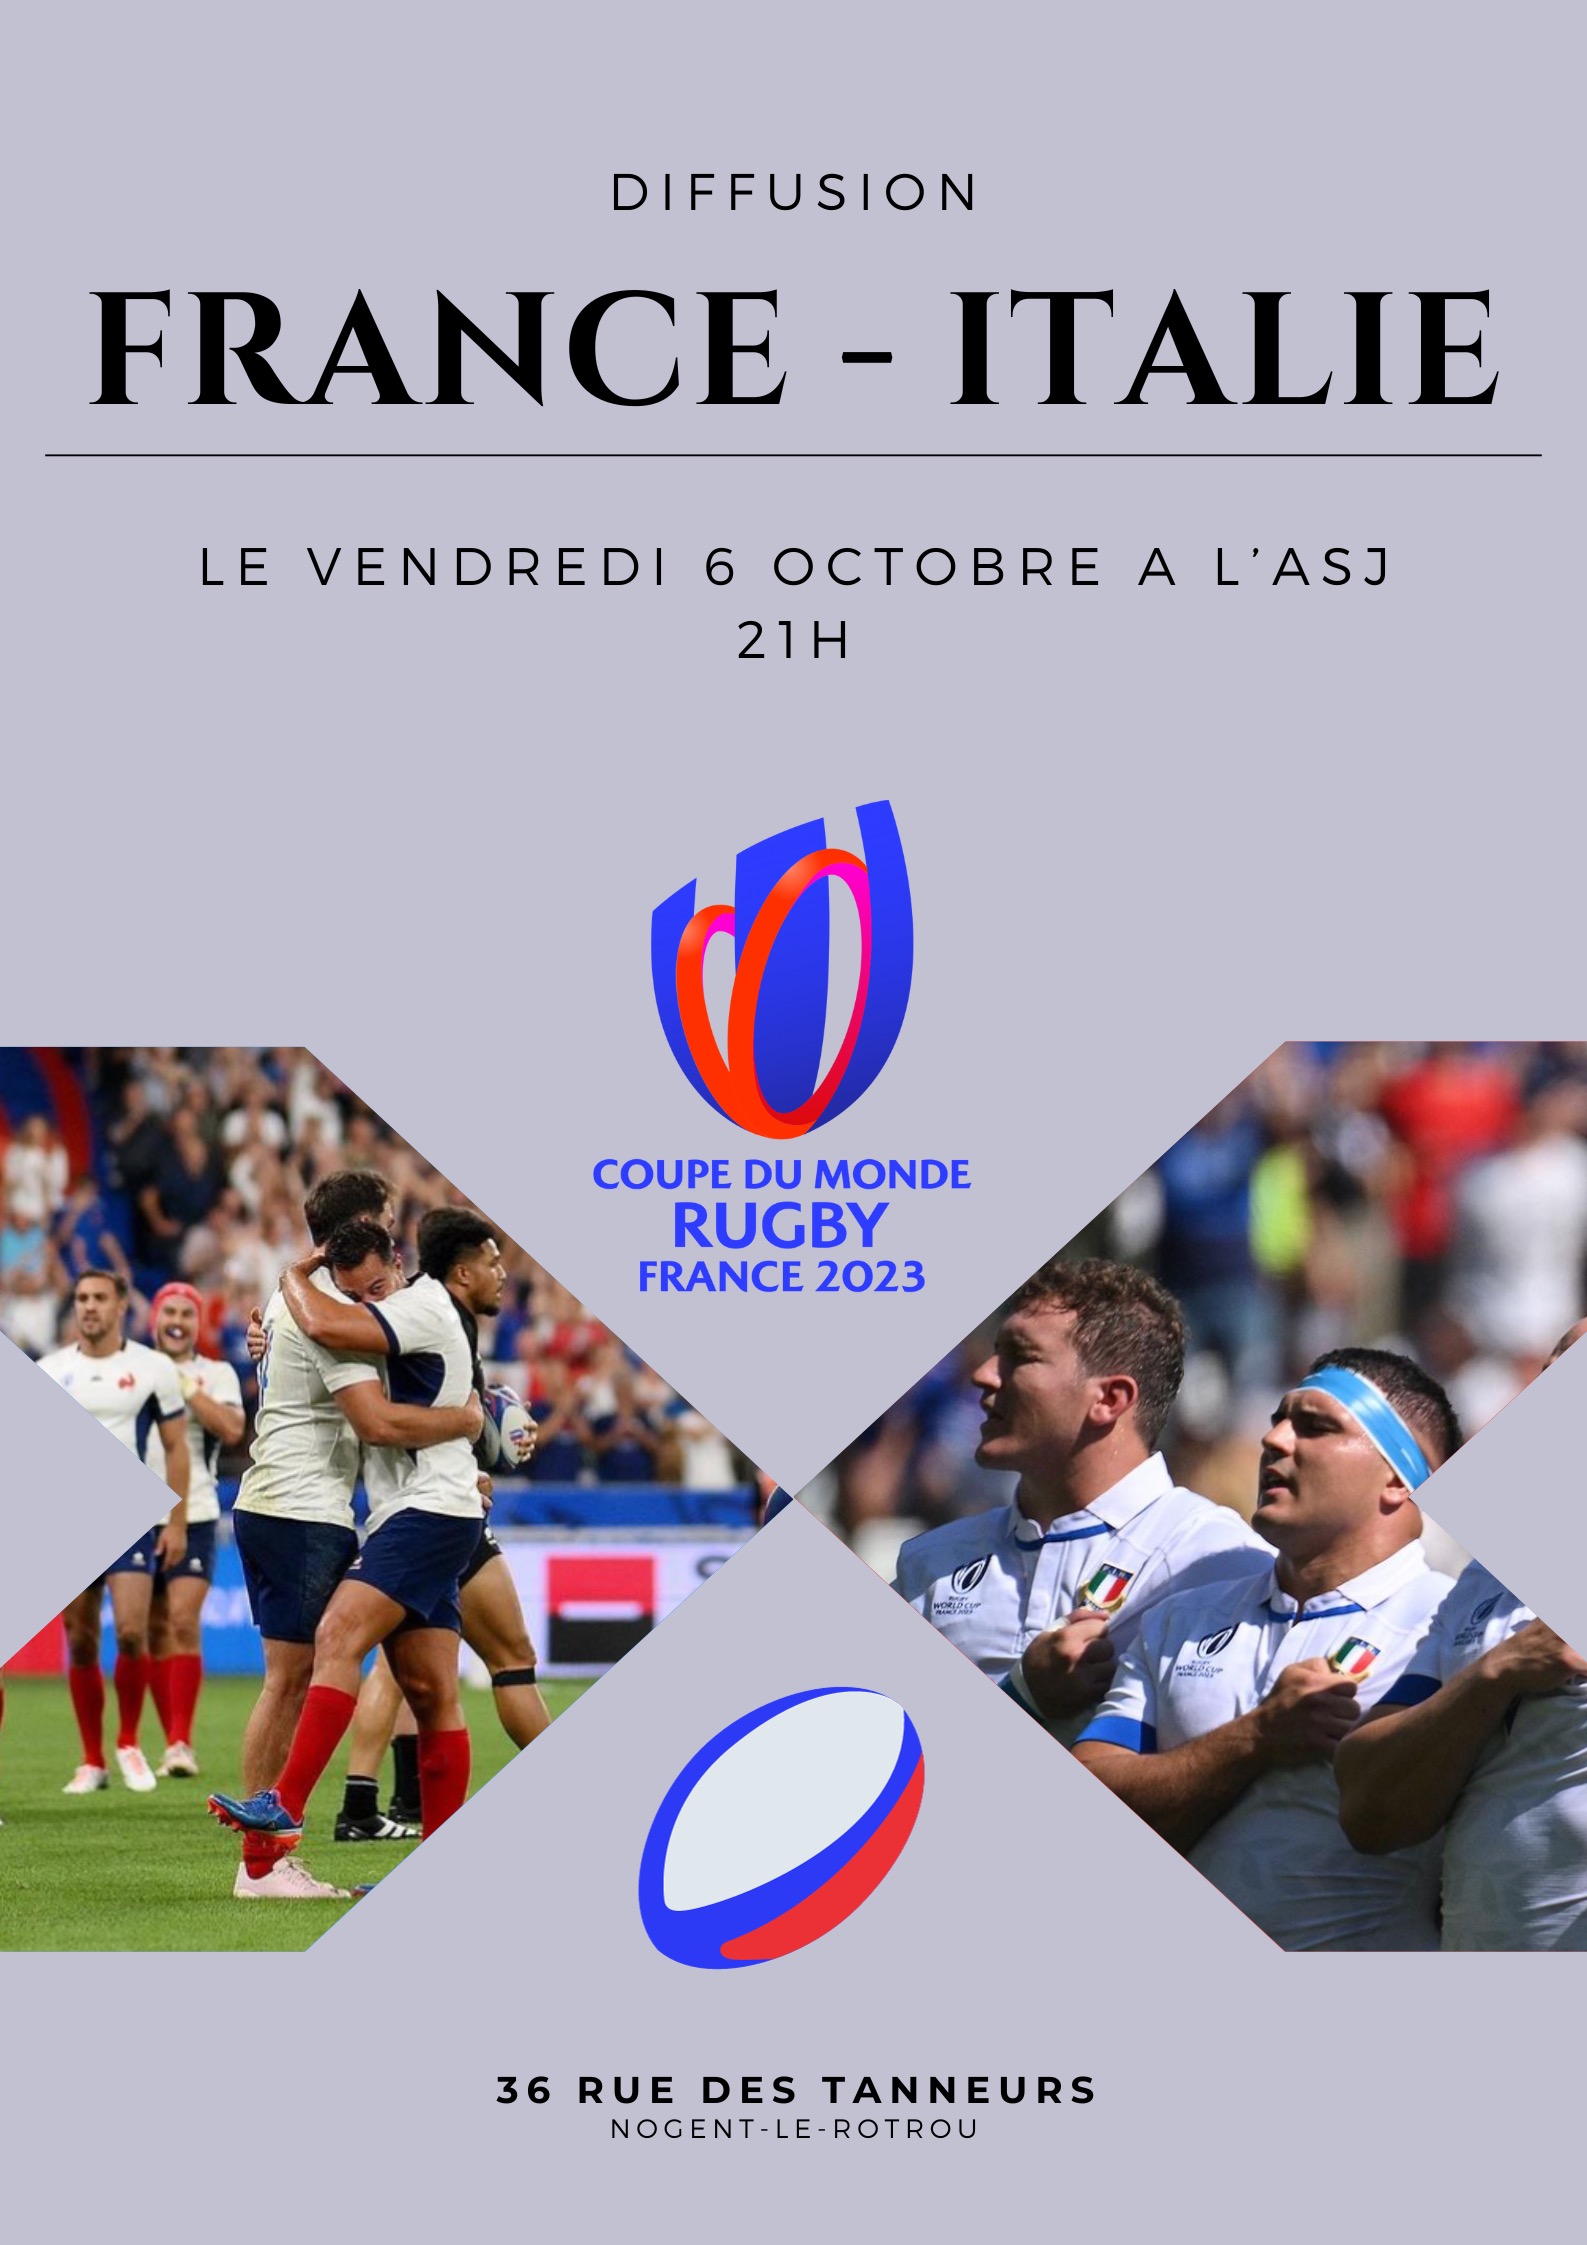 la CdC du Perche : Match rugby France - Italie I ASJ